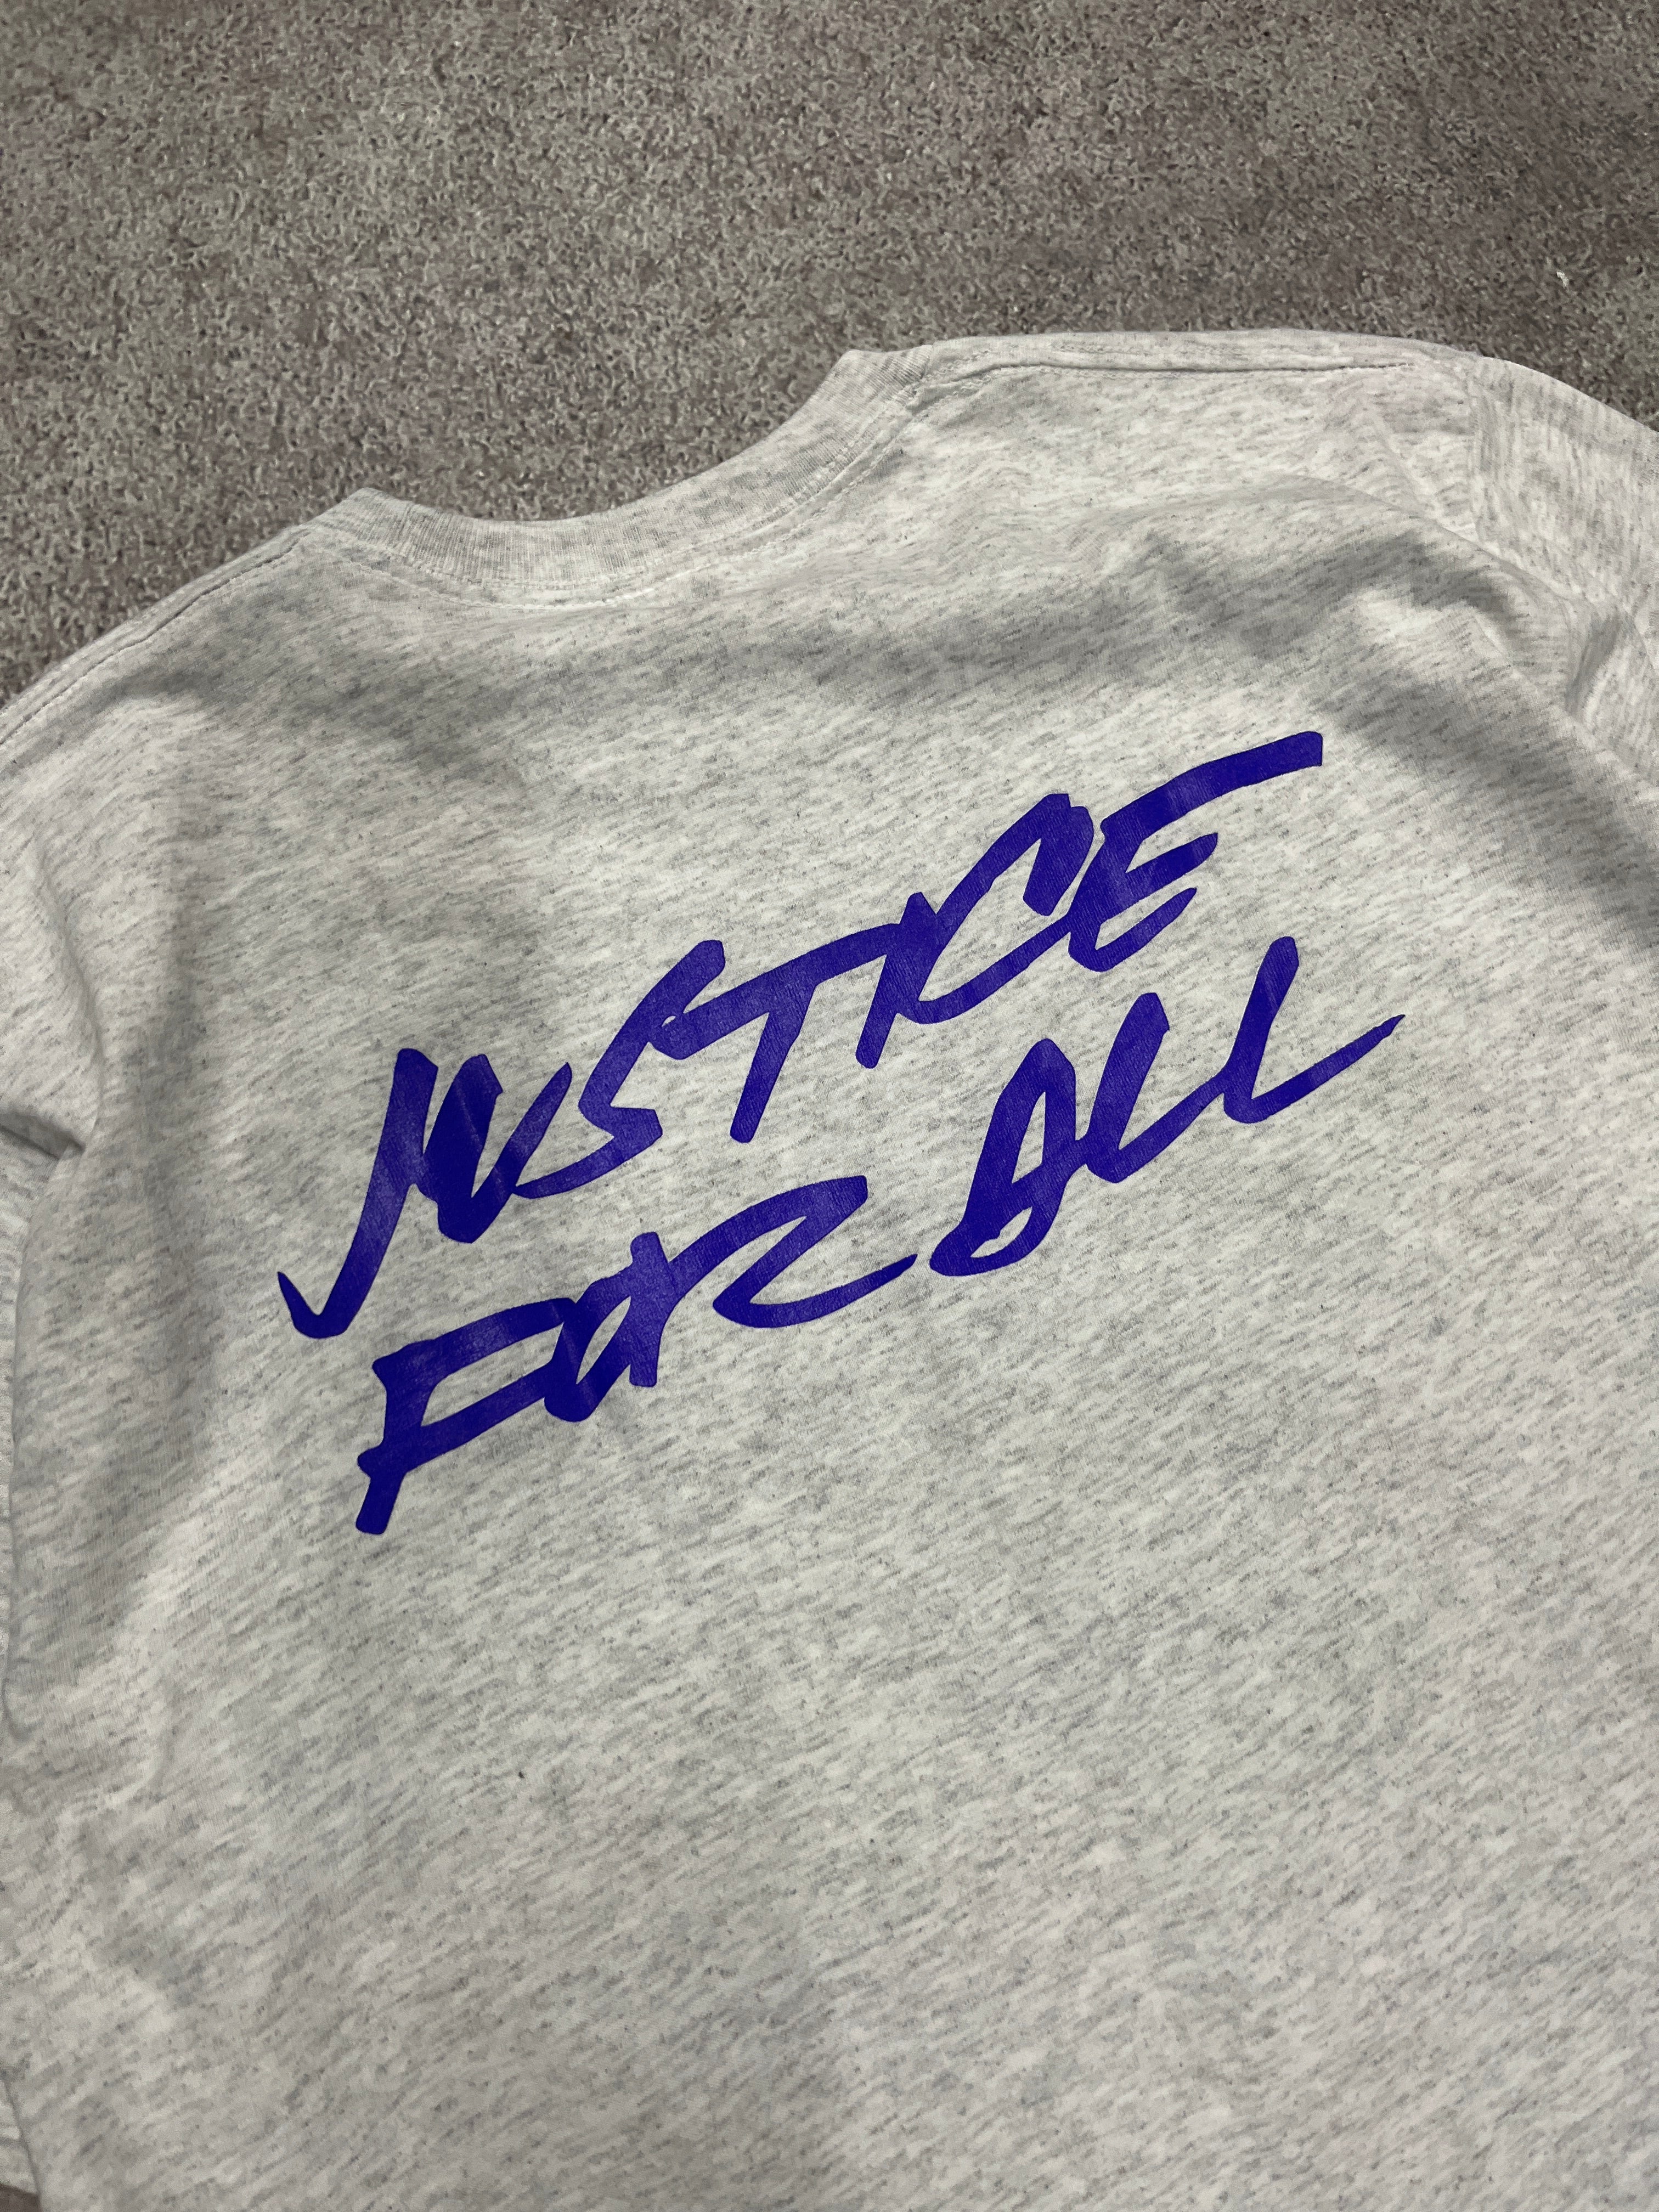 Supreme Justice For All TShirt Grey // Medium - RHAGHOUSE VINTAGE